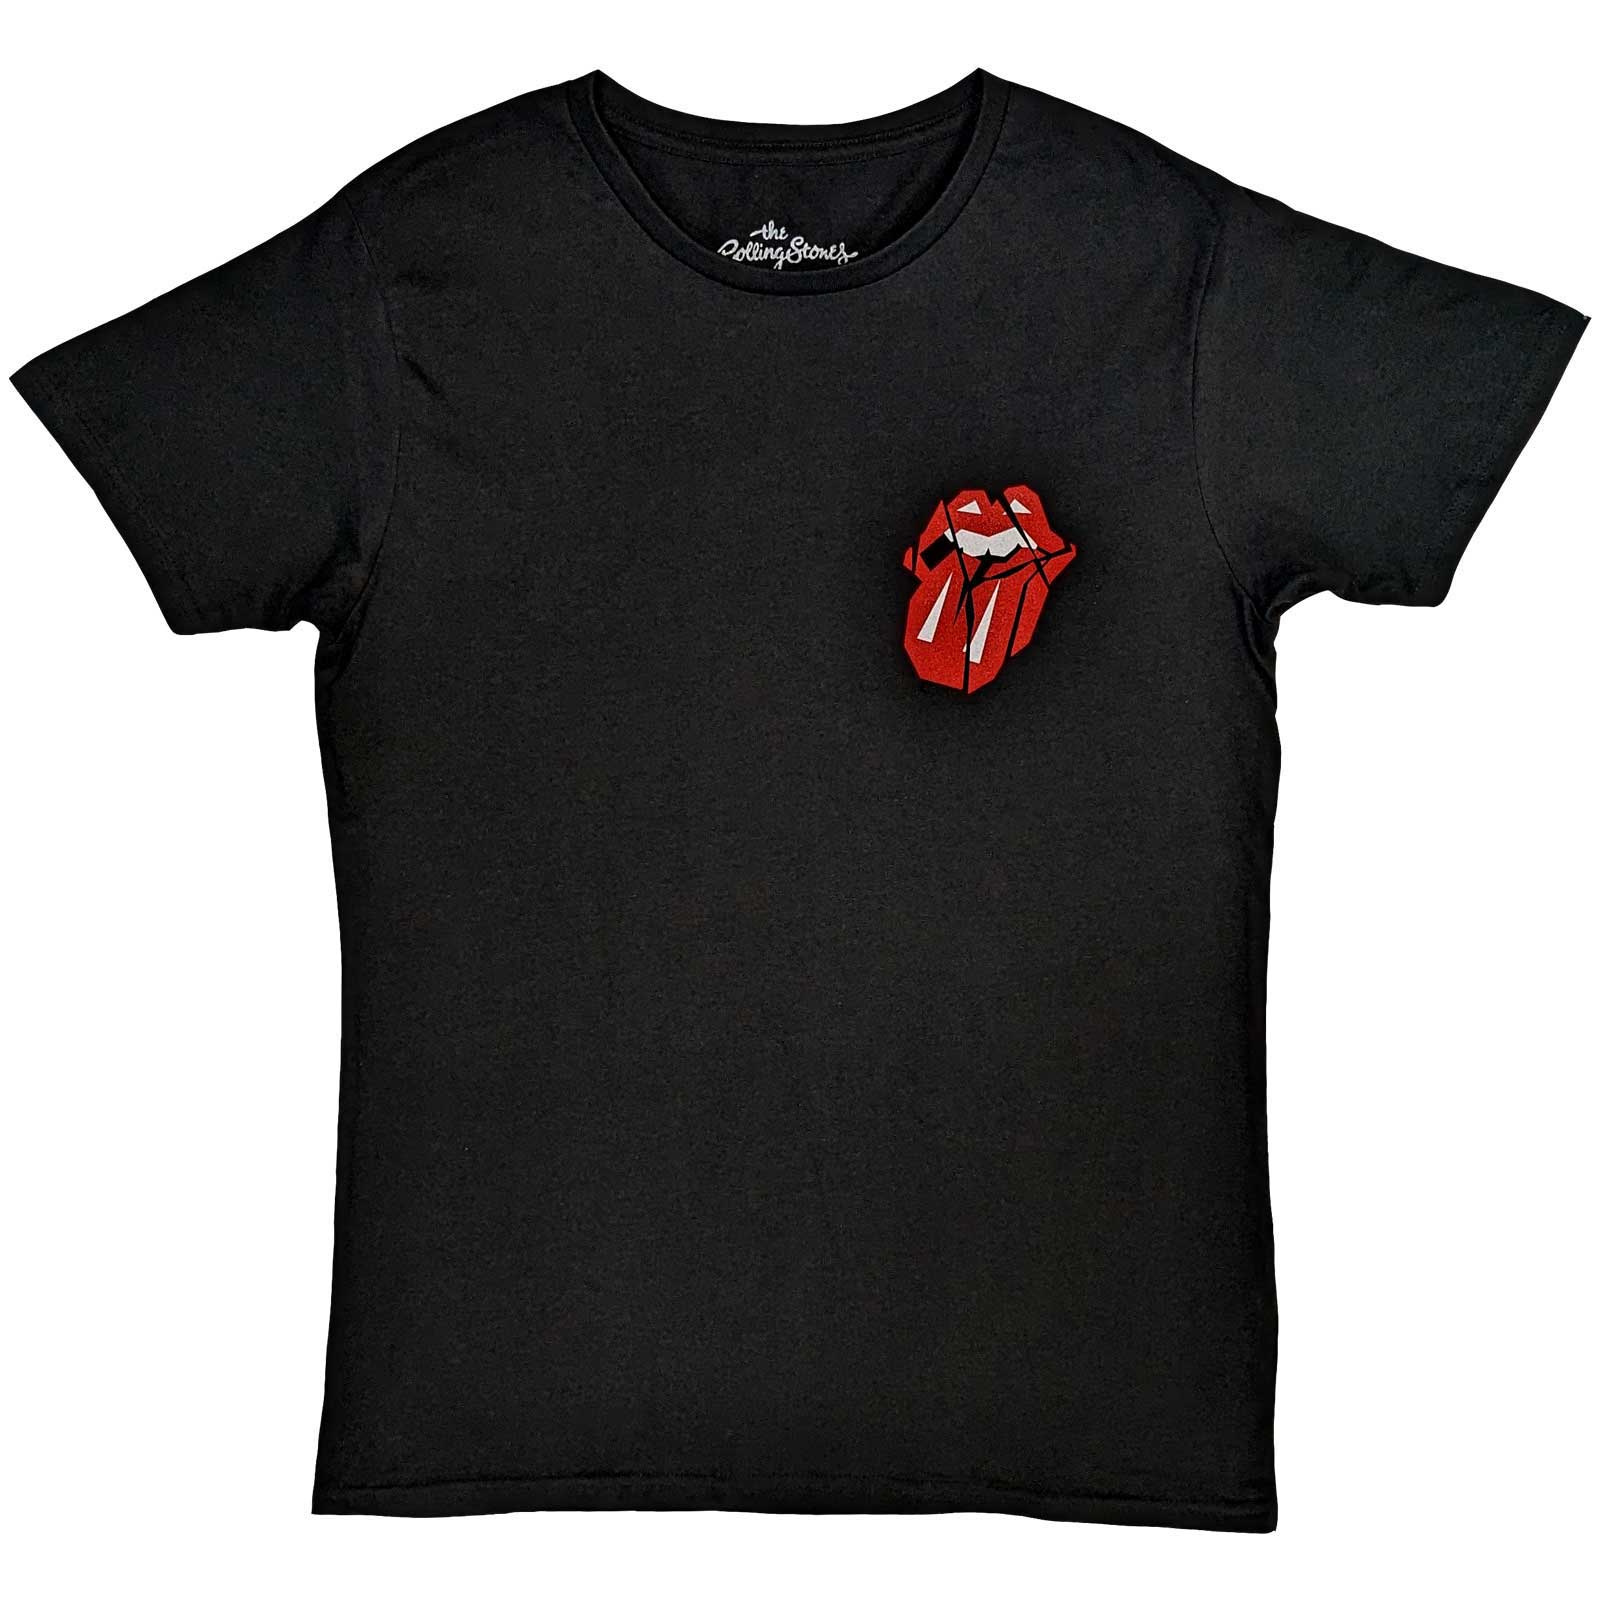 The Rolling Stones T-Shirt für Erwachsene – Hackney Diamonds London (Rückendruck) – offizielles Lizenzdesign